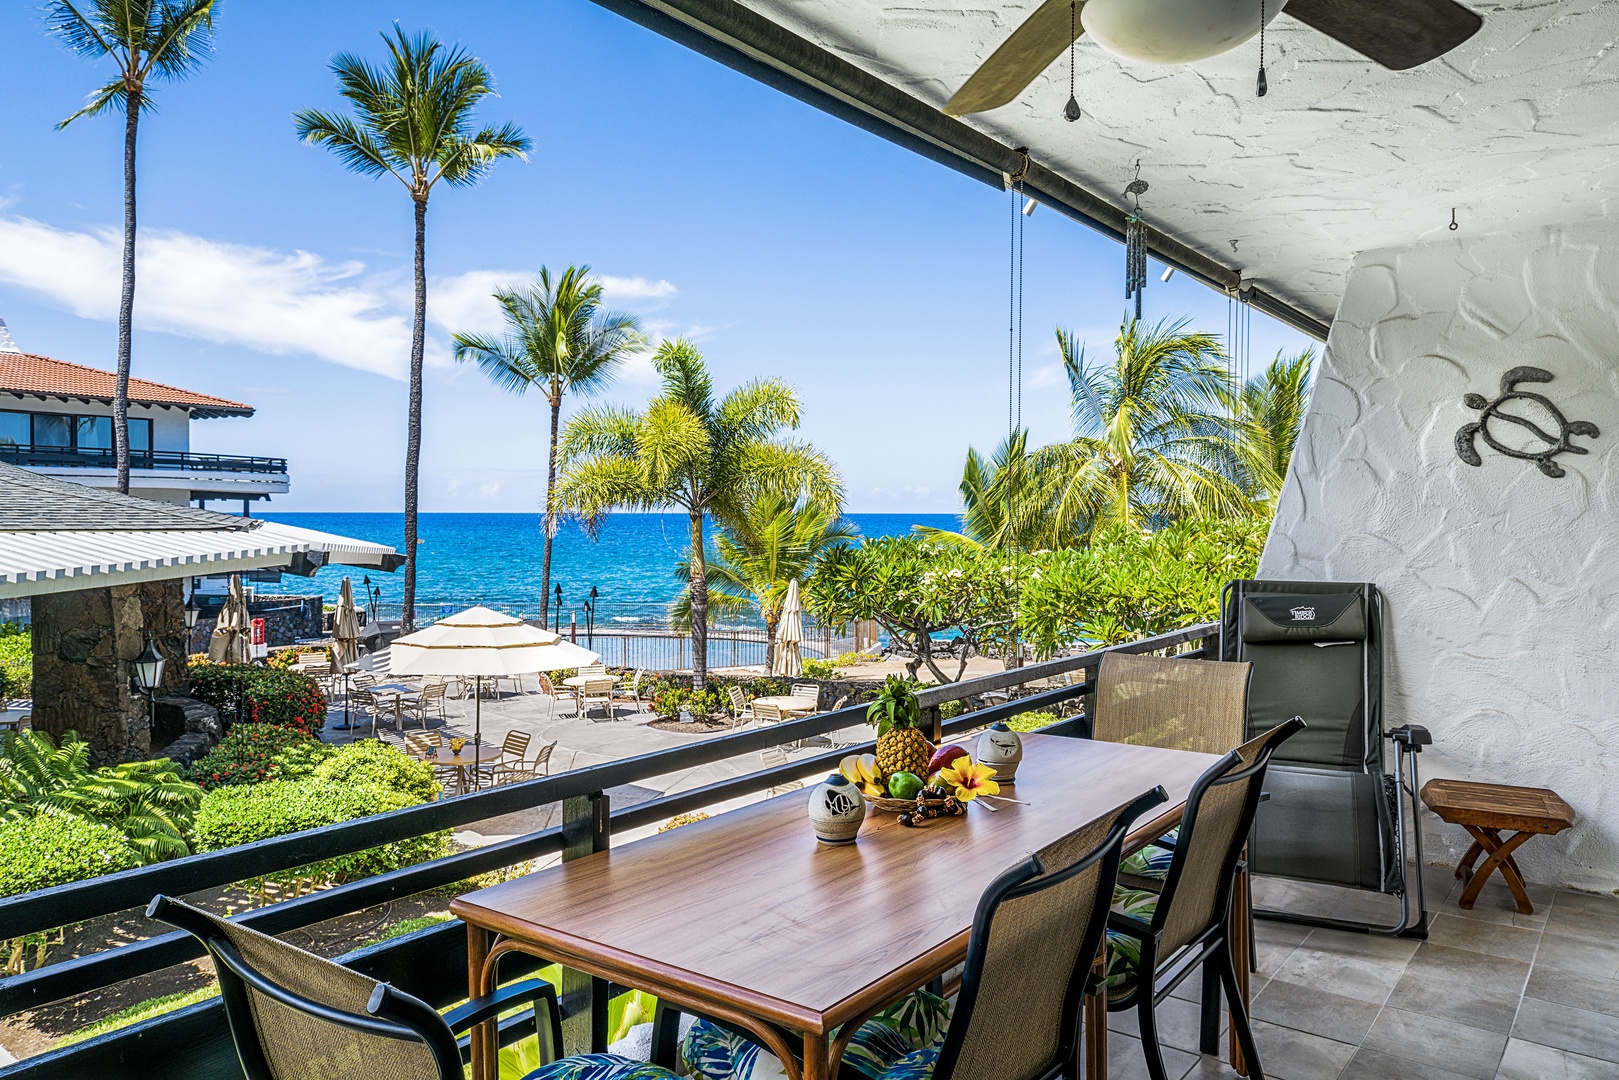 Kailua Kona Vacation Rentals, Casa De Emdeko 235 - Spacious Lanai with breathtaking views of the Kona Coast!